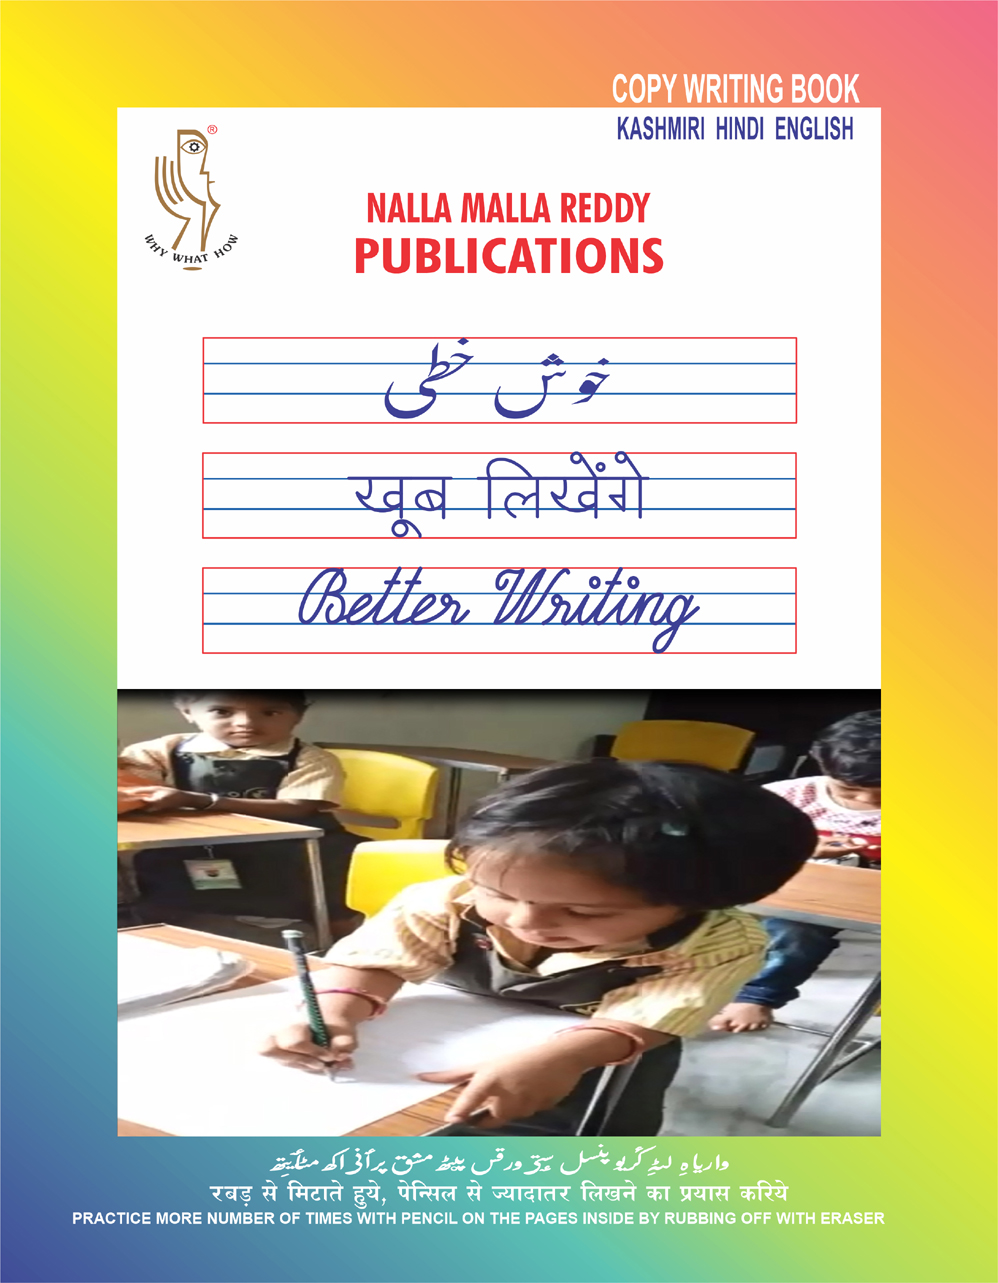 Kashmiri Hindi English Alphabets Copy Writing Book Tittle website